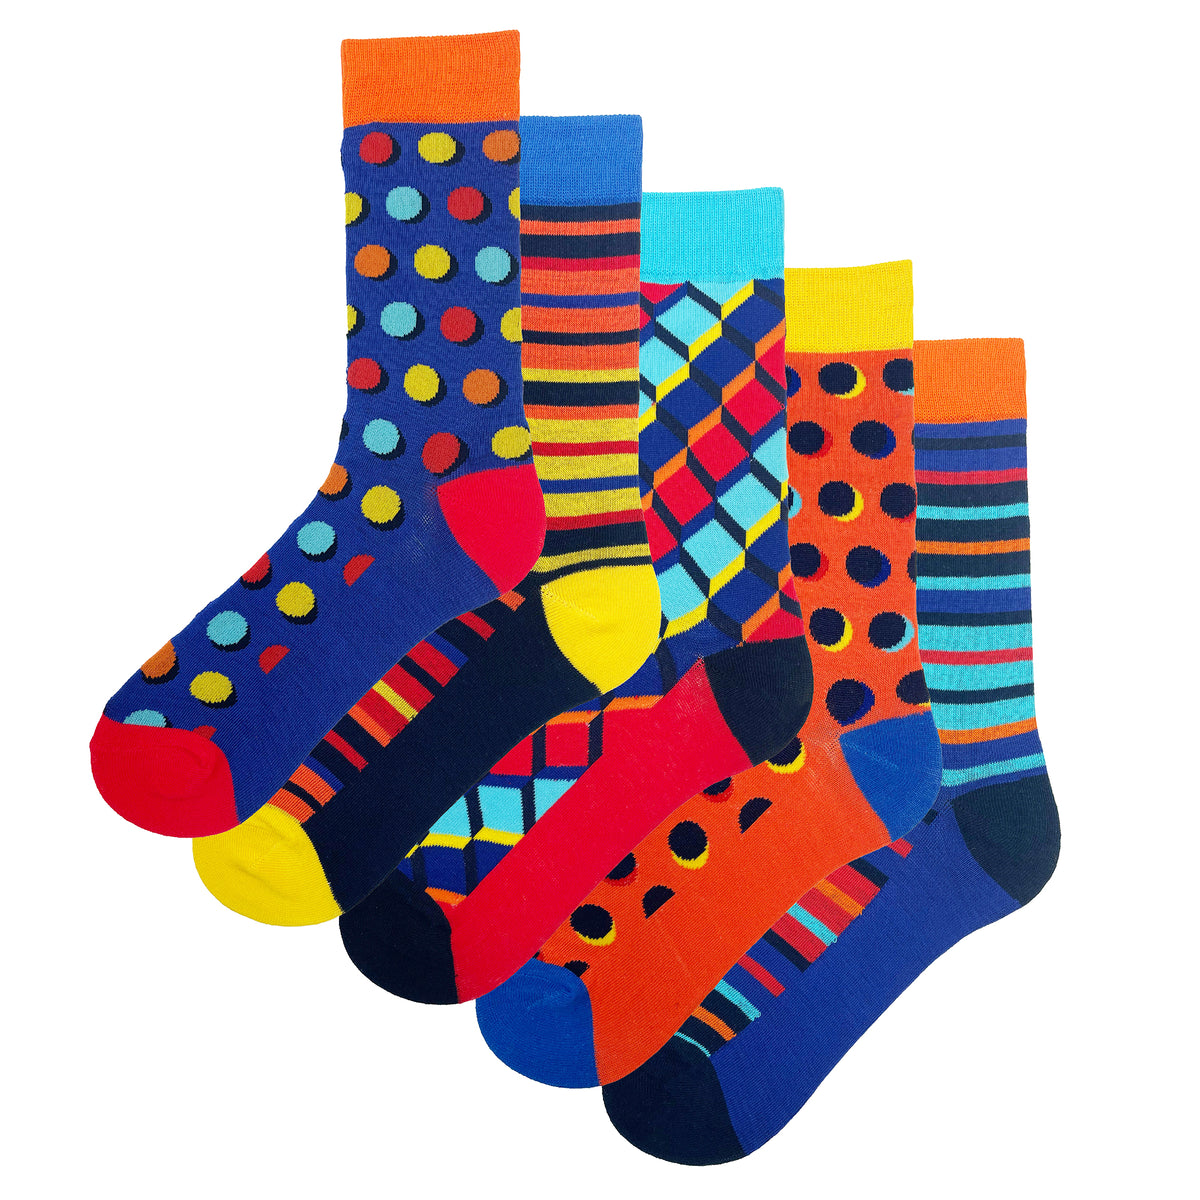 Mens Geo/Stripes/Dots Socks 5 Pack